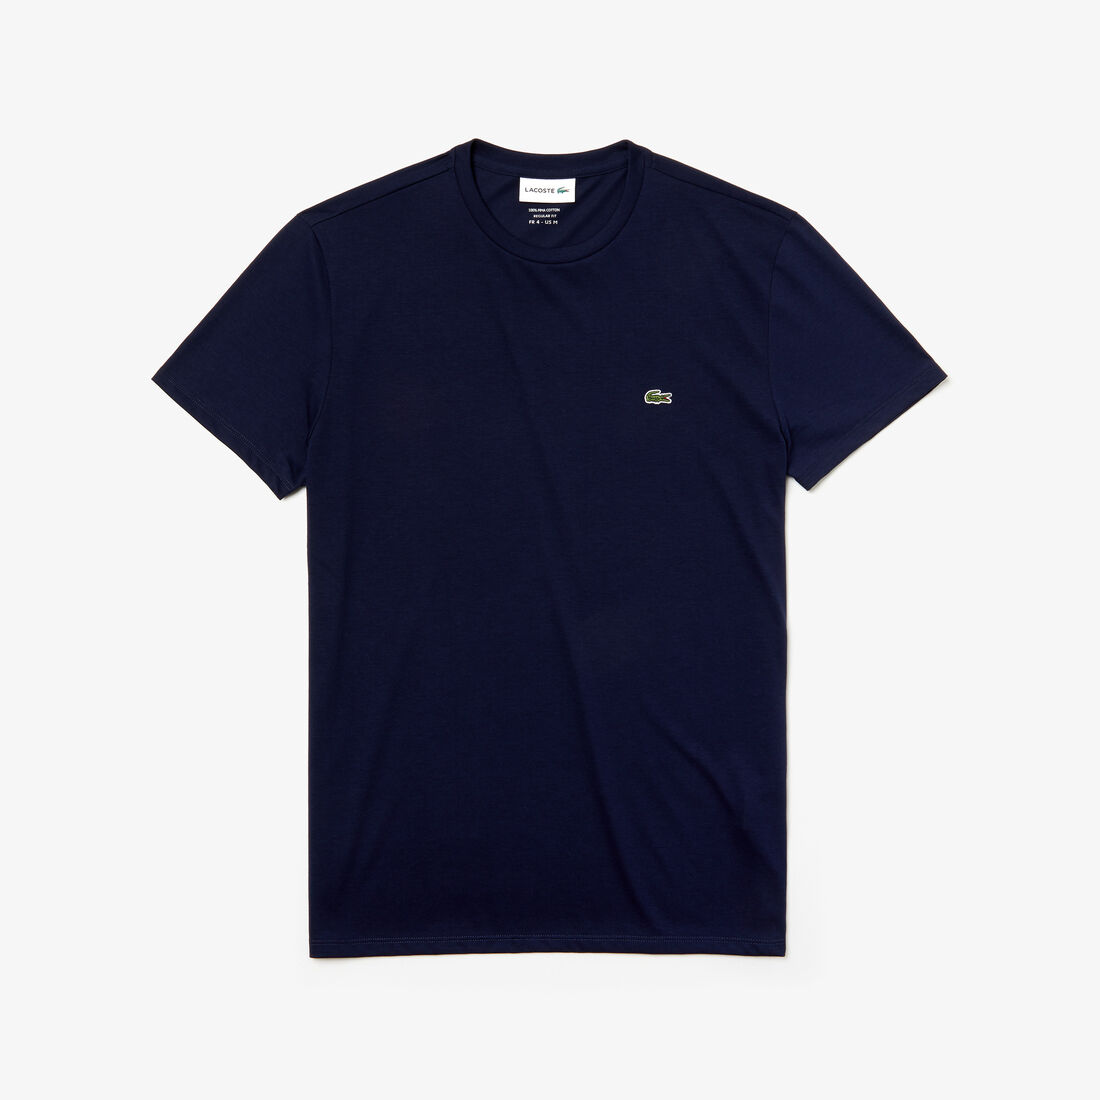 Lacoste - Pima Cotton Jersey T-Shirt, Crew Neck - Navy